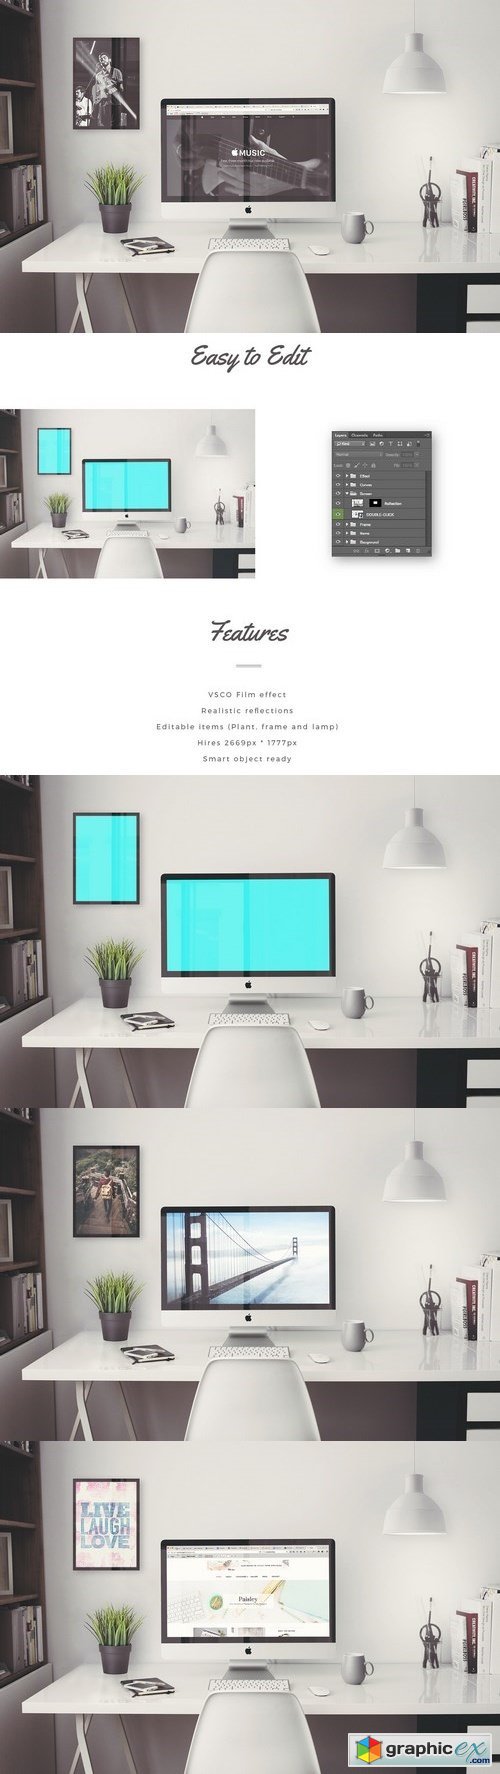 iMac 5k Retina 27-Inch Home Office Mockup